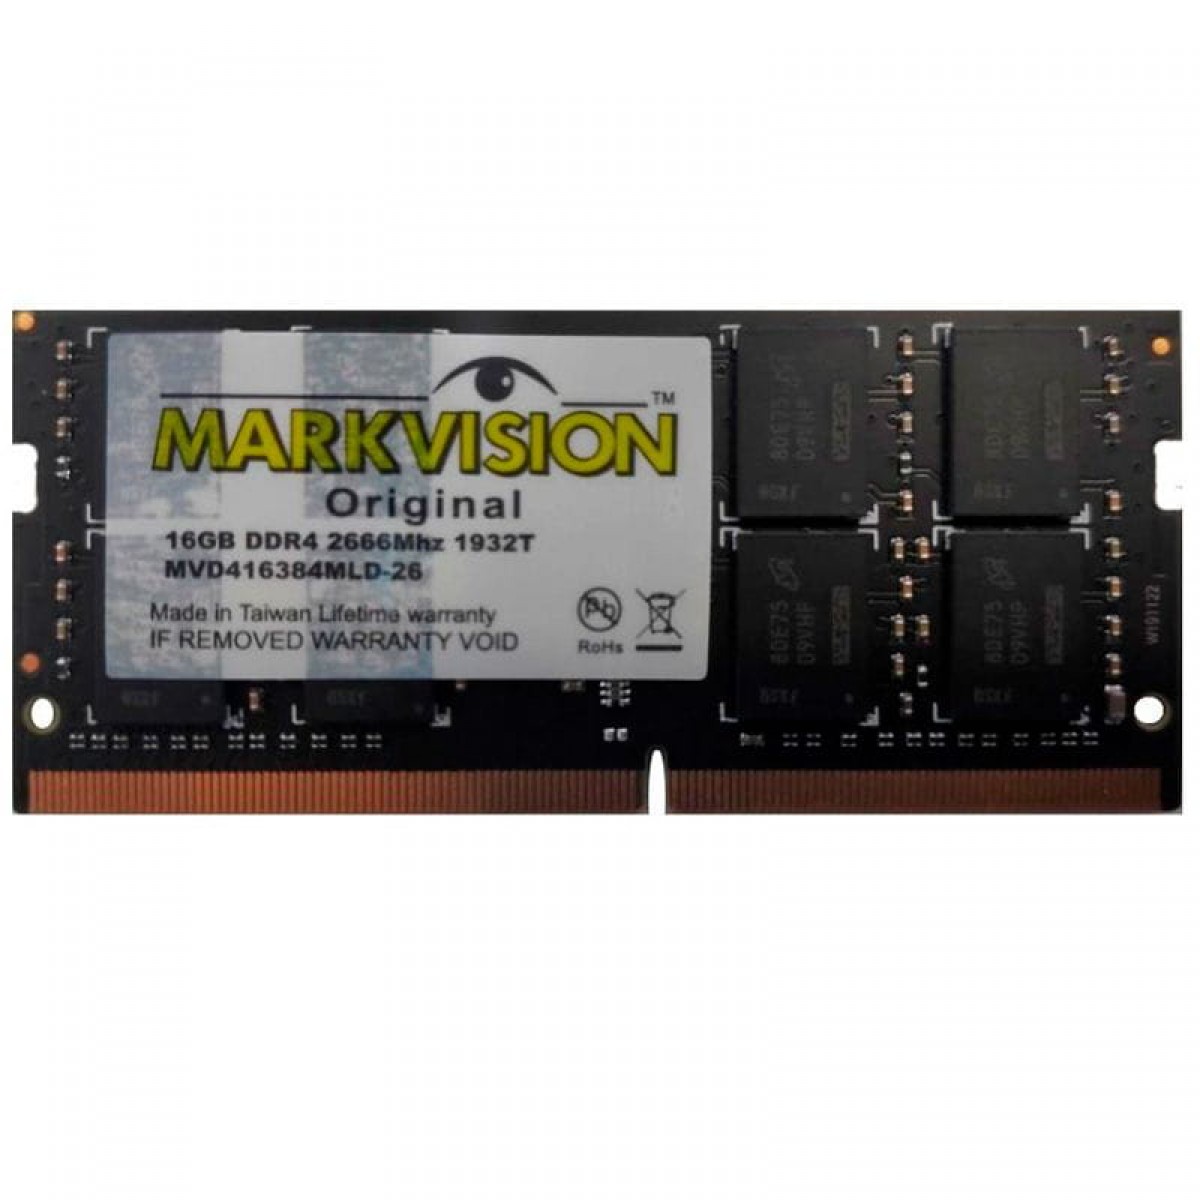 Memória P/ Notebook DDR4 Markvision 16GB 2666Mhz, MVD416384MLD-26